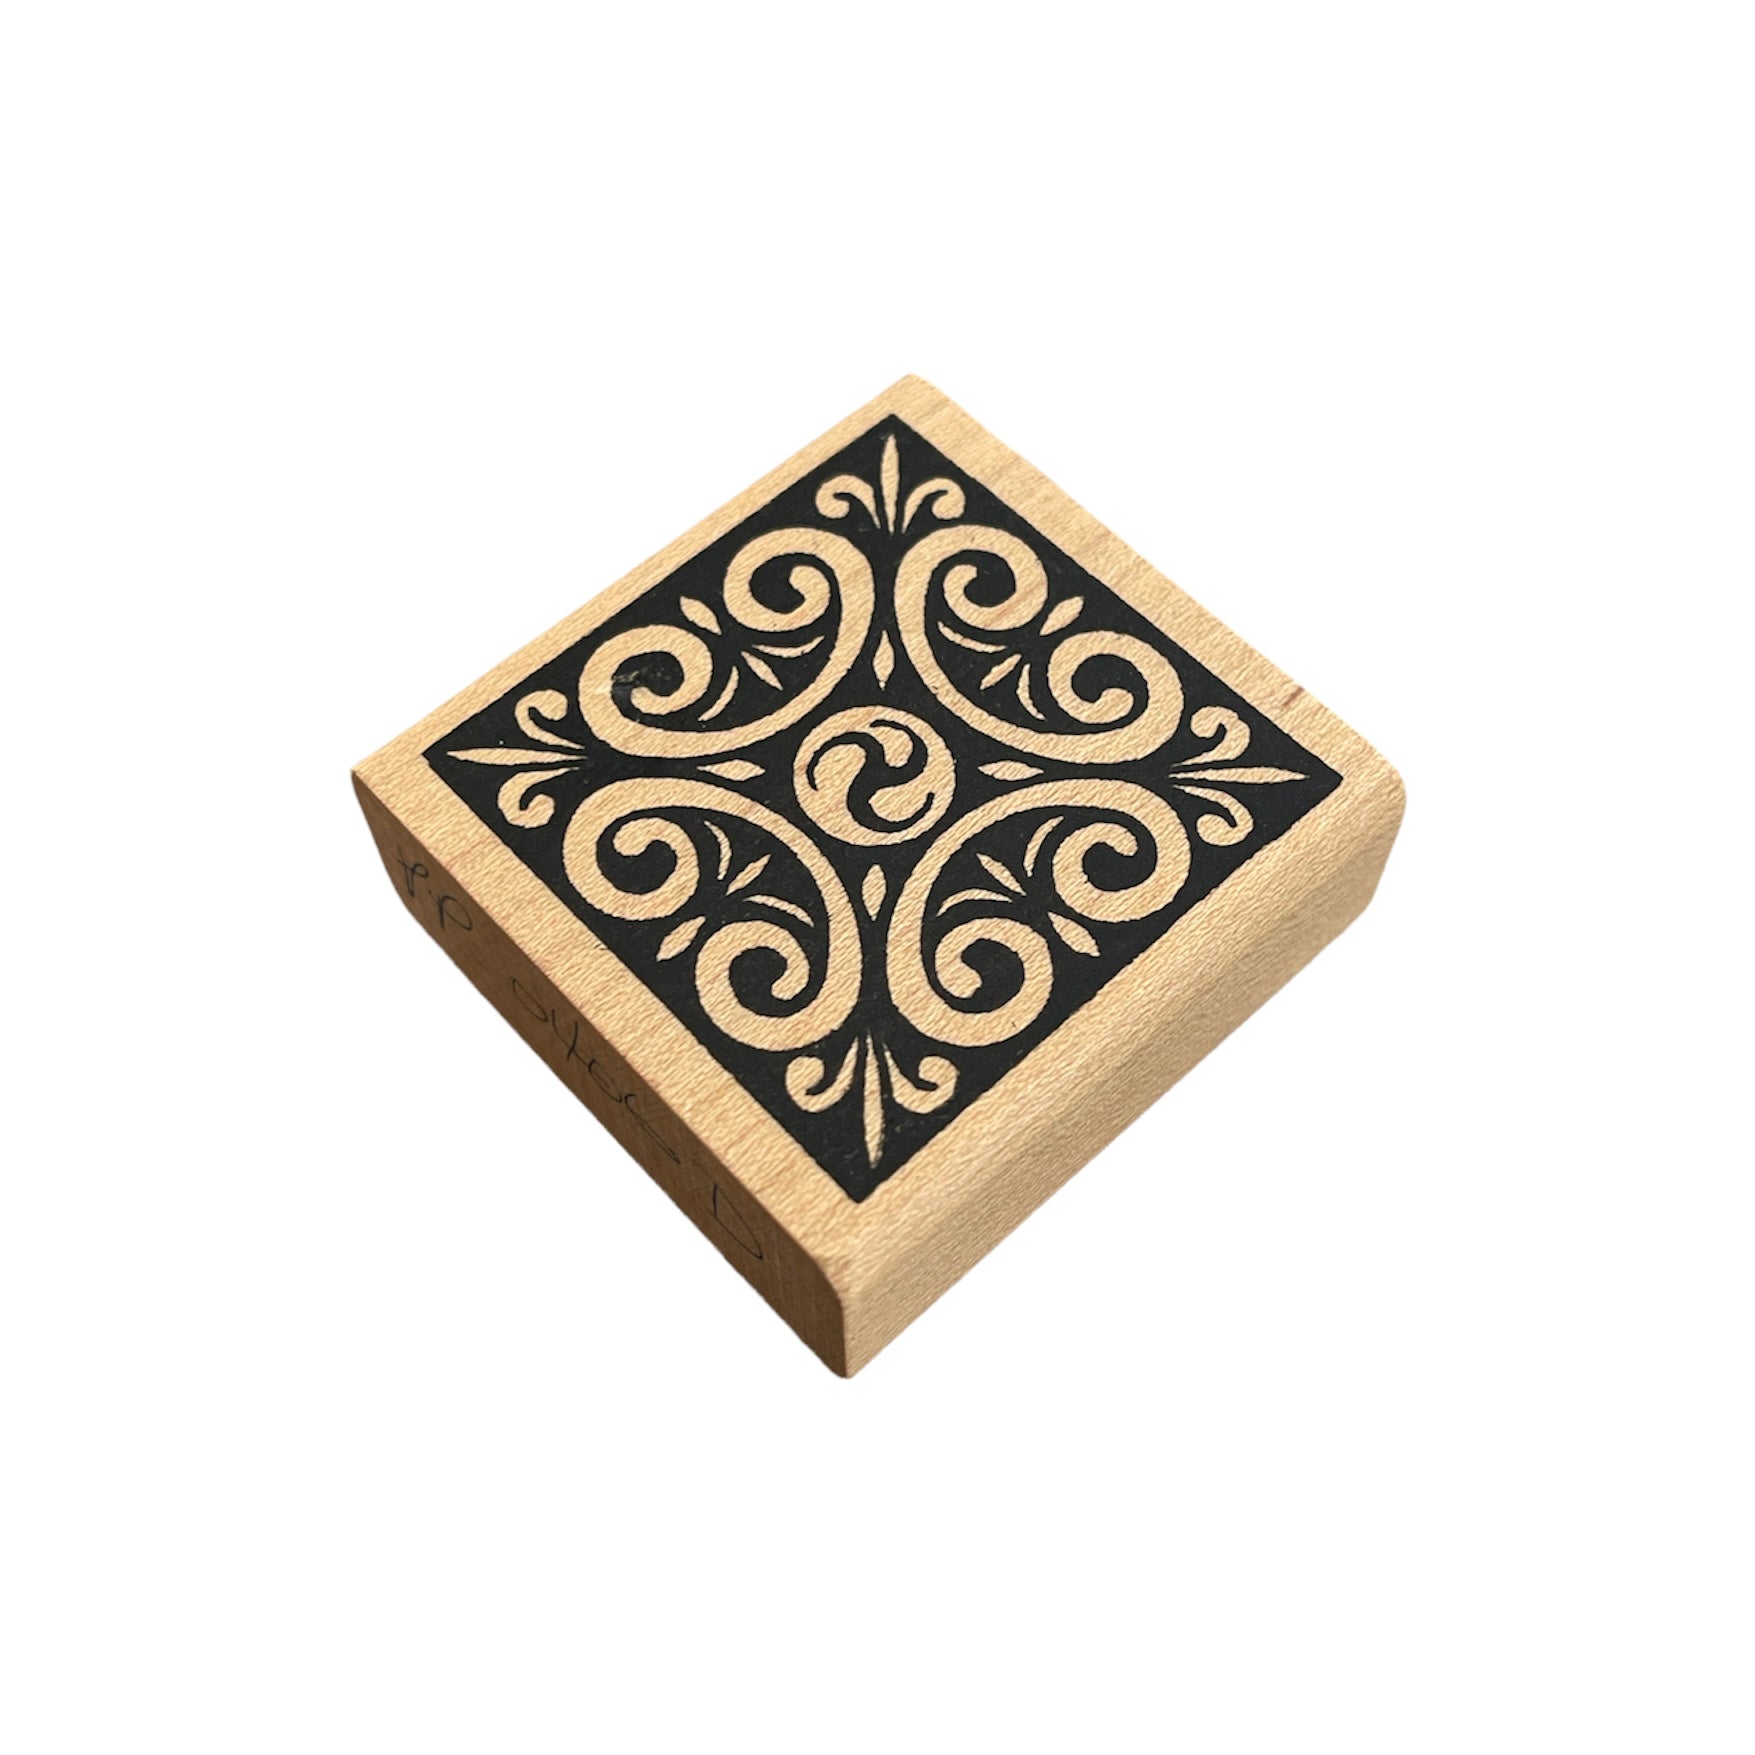 Peddler's Pack - Wood Mounted Stamp - Tile Pattern